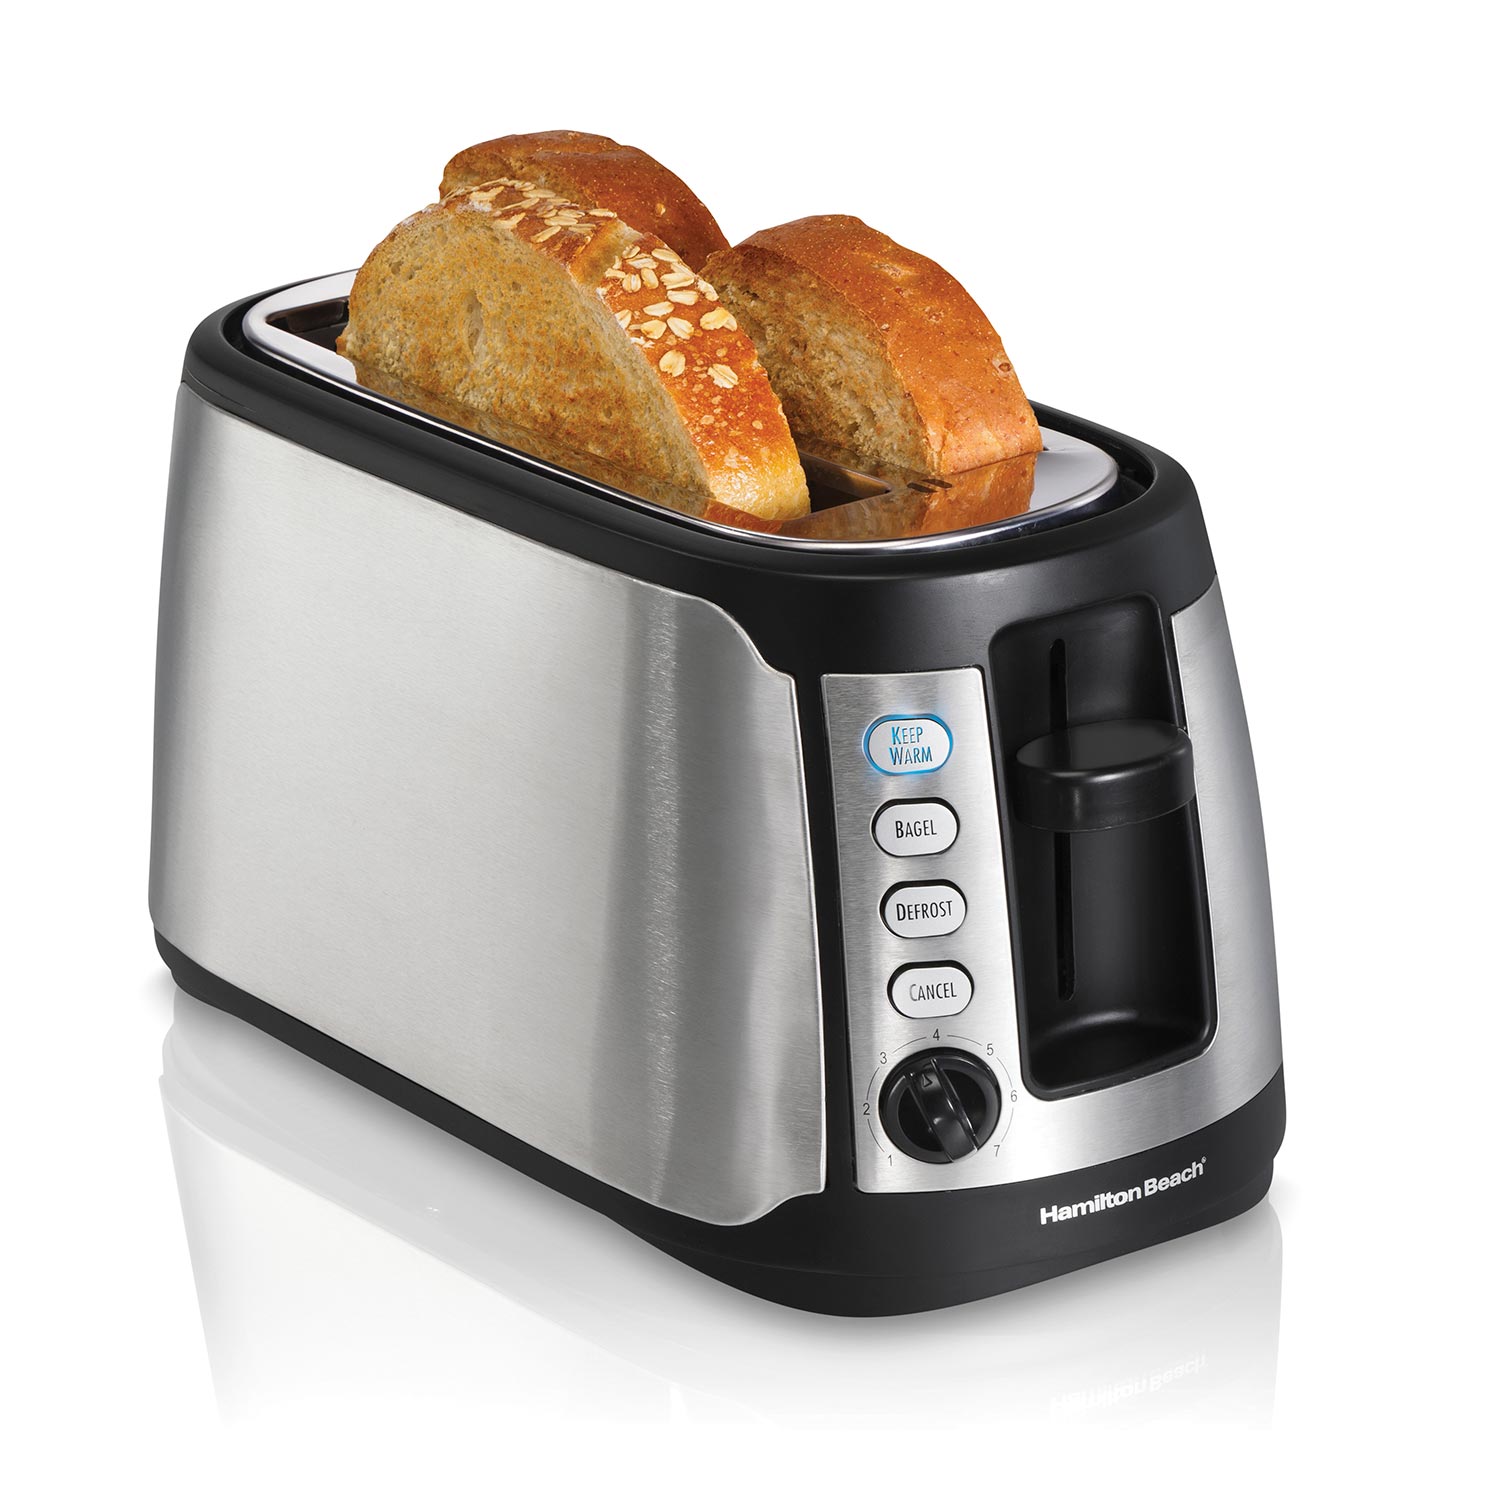 Keep Warm 4 Slice Long Slot Toaster (24810)